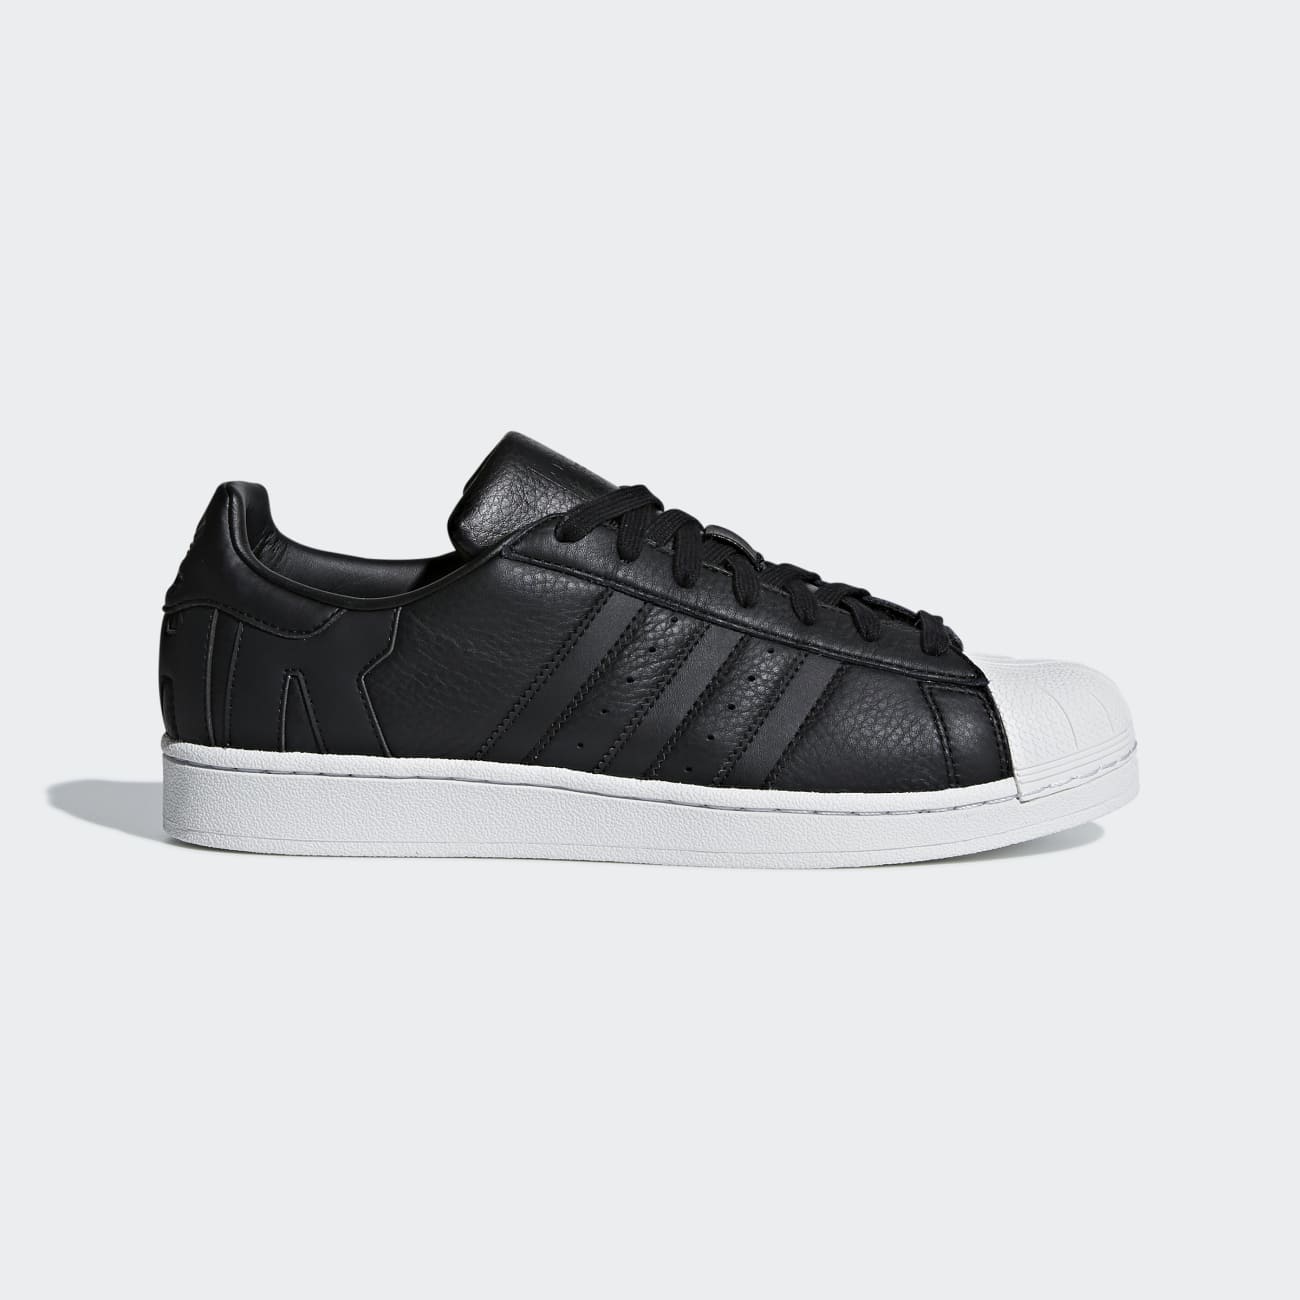 Adidas SST Férfi Originals Cipő - Fekete [D95601]